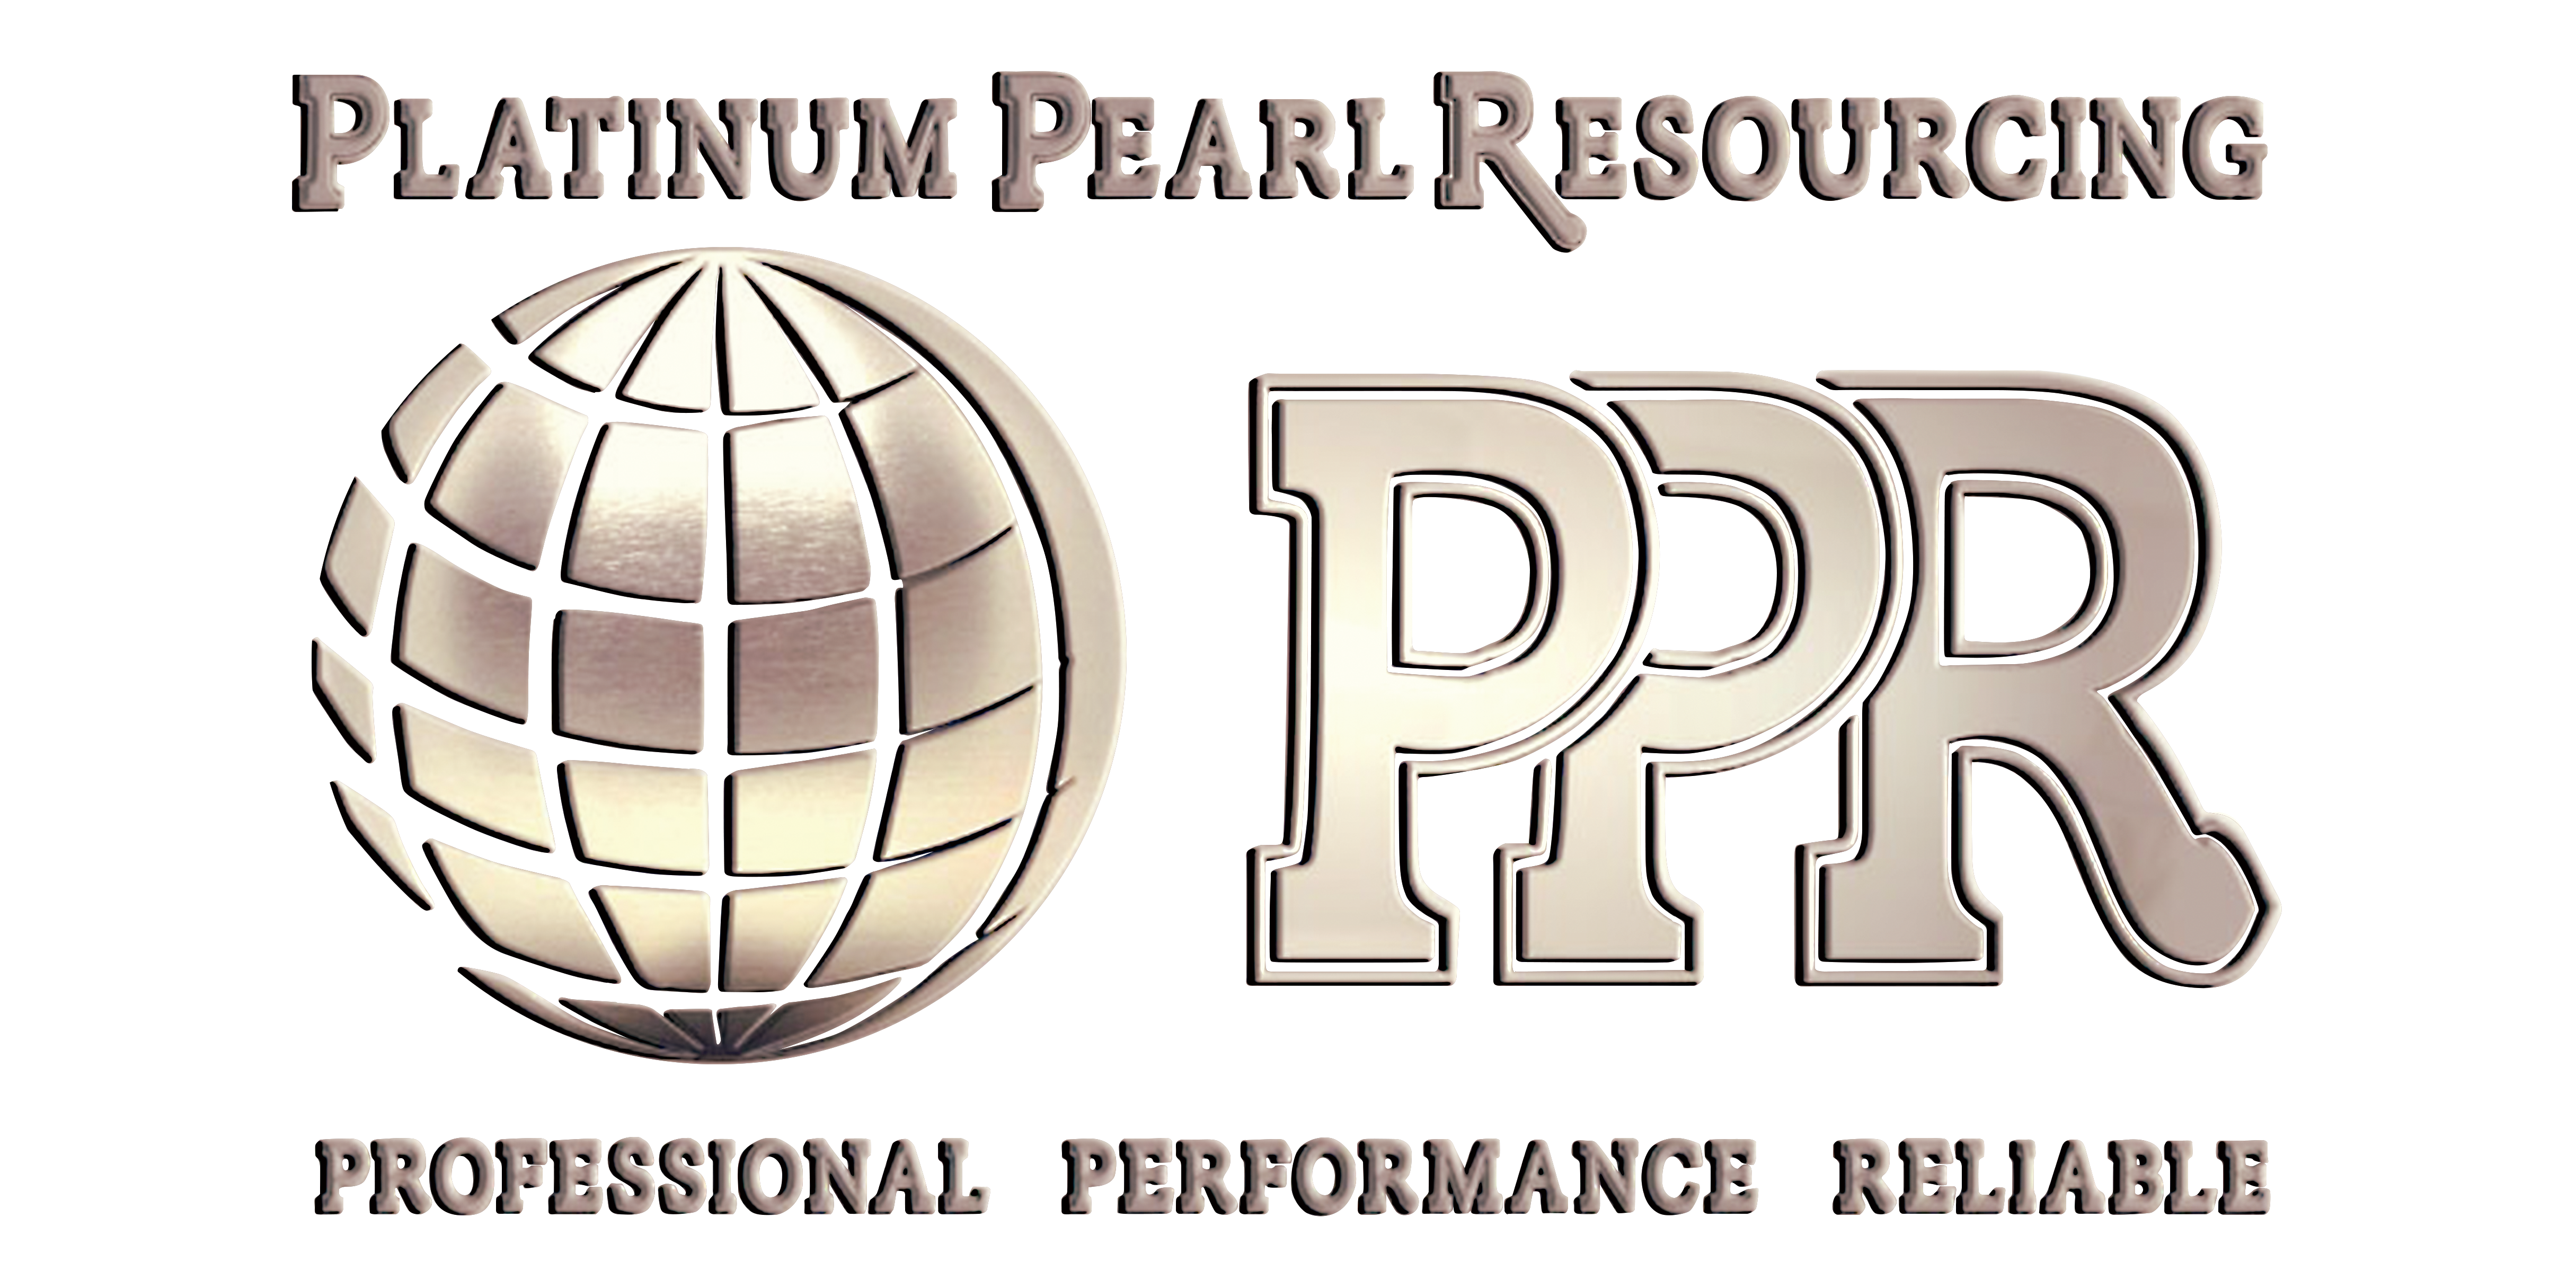 platinumpearlresourcing.com